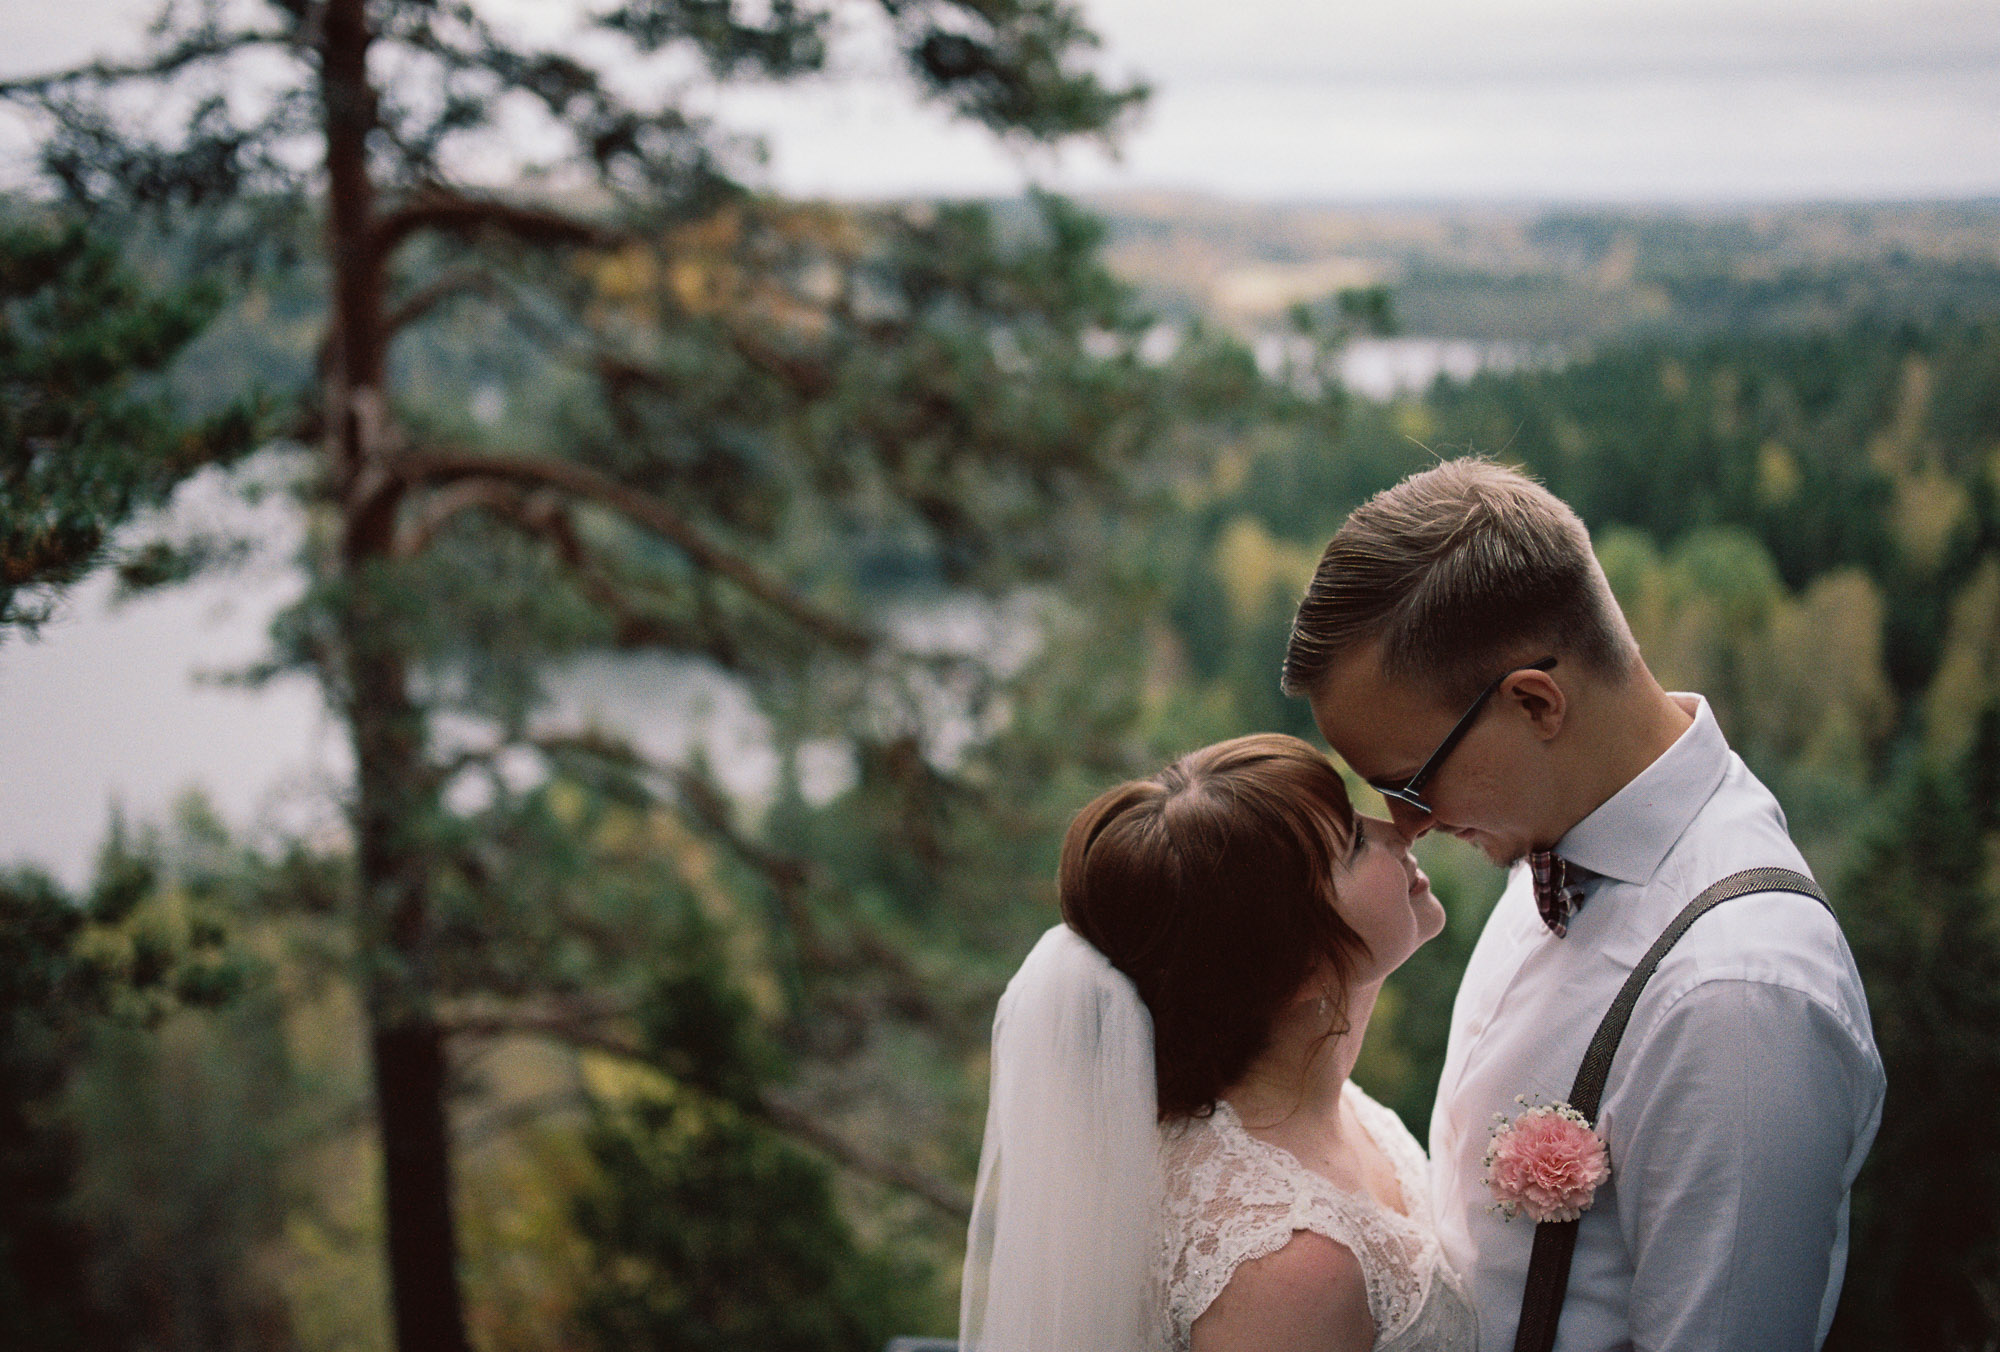 jere-satamo-analog-film-wedding-photographer-finland-126.jpg